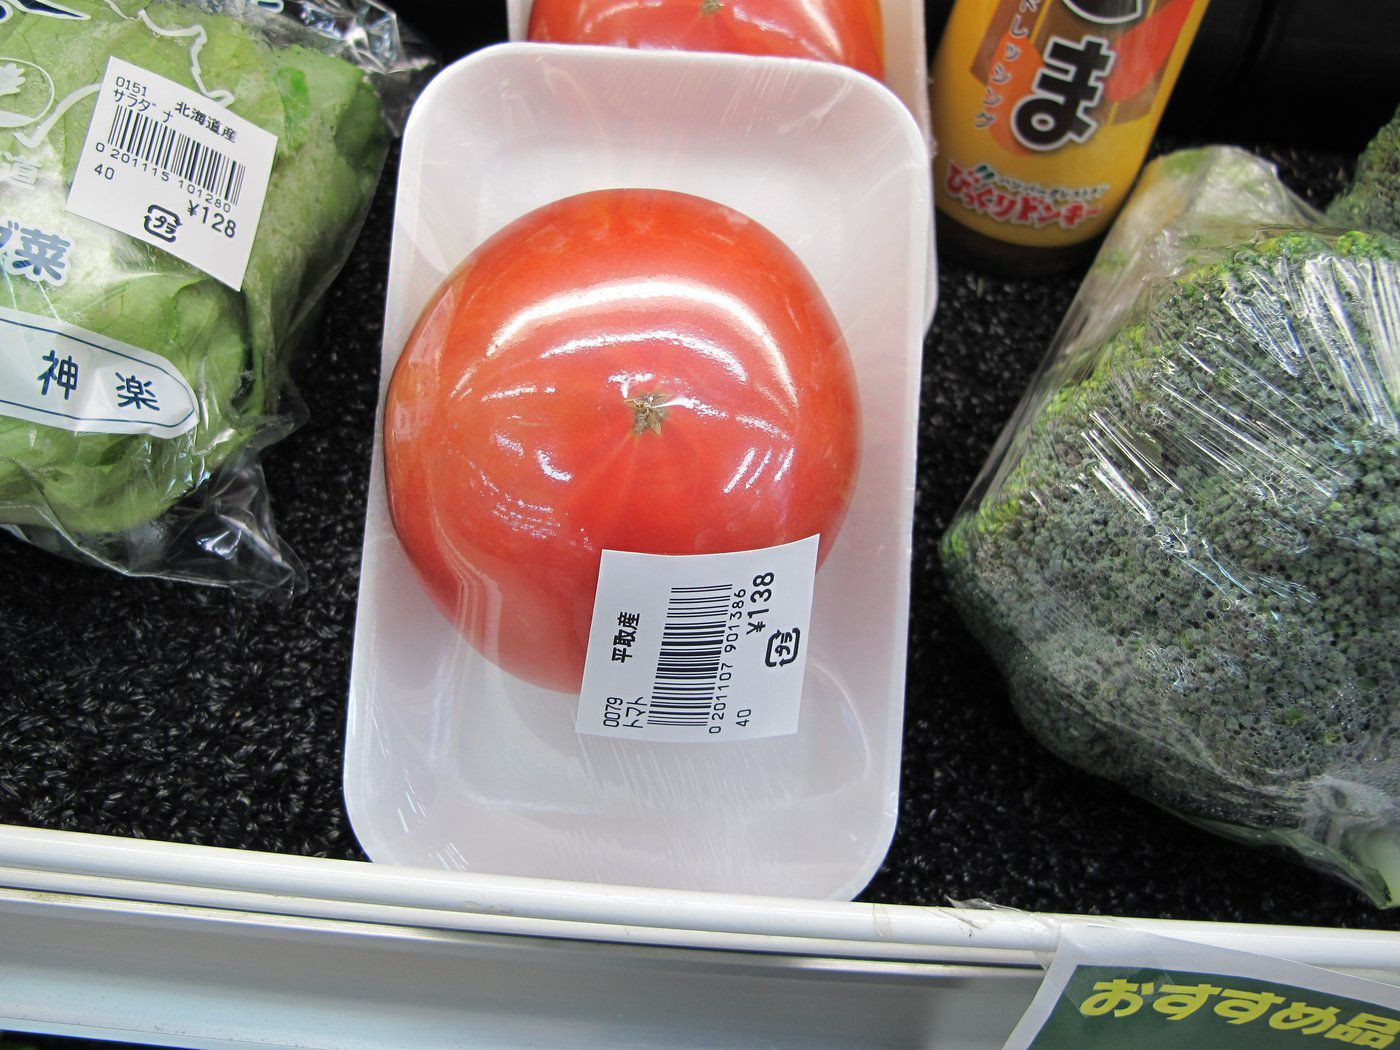 Does a single tomato really need a styrofoam tray and plastic wrap? (Sgroey (Wikimedia)